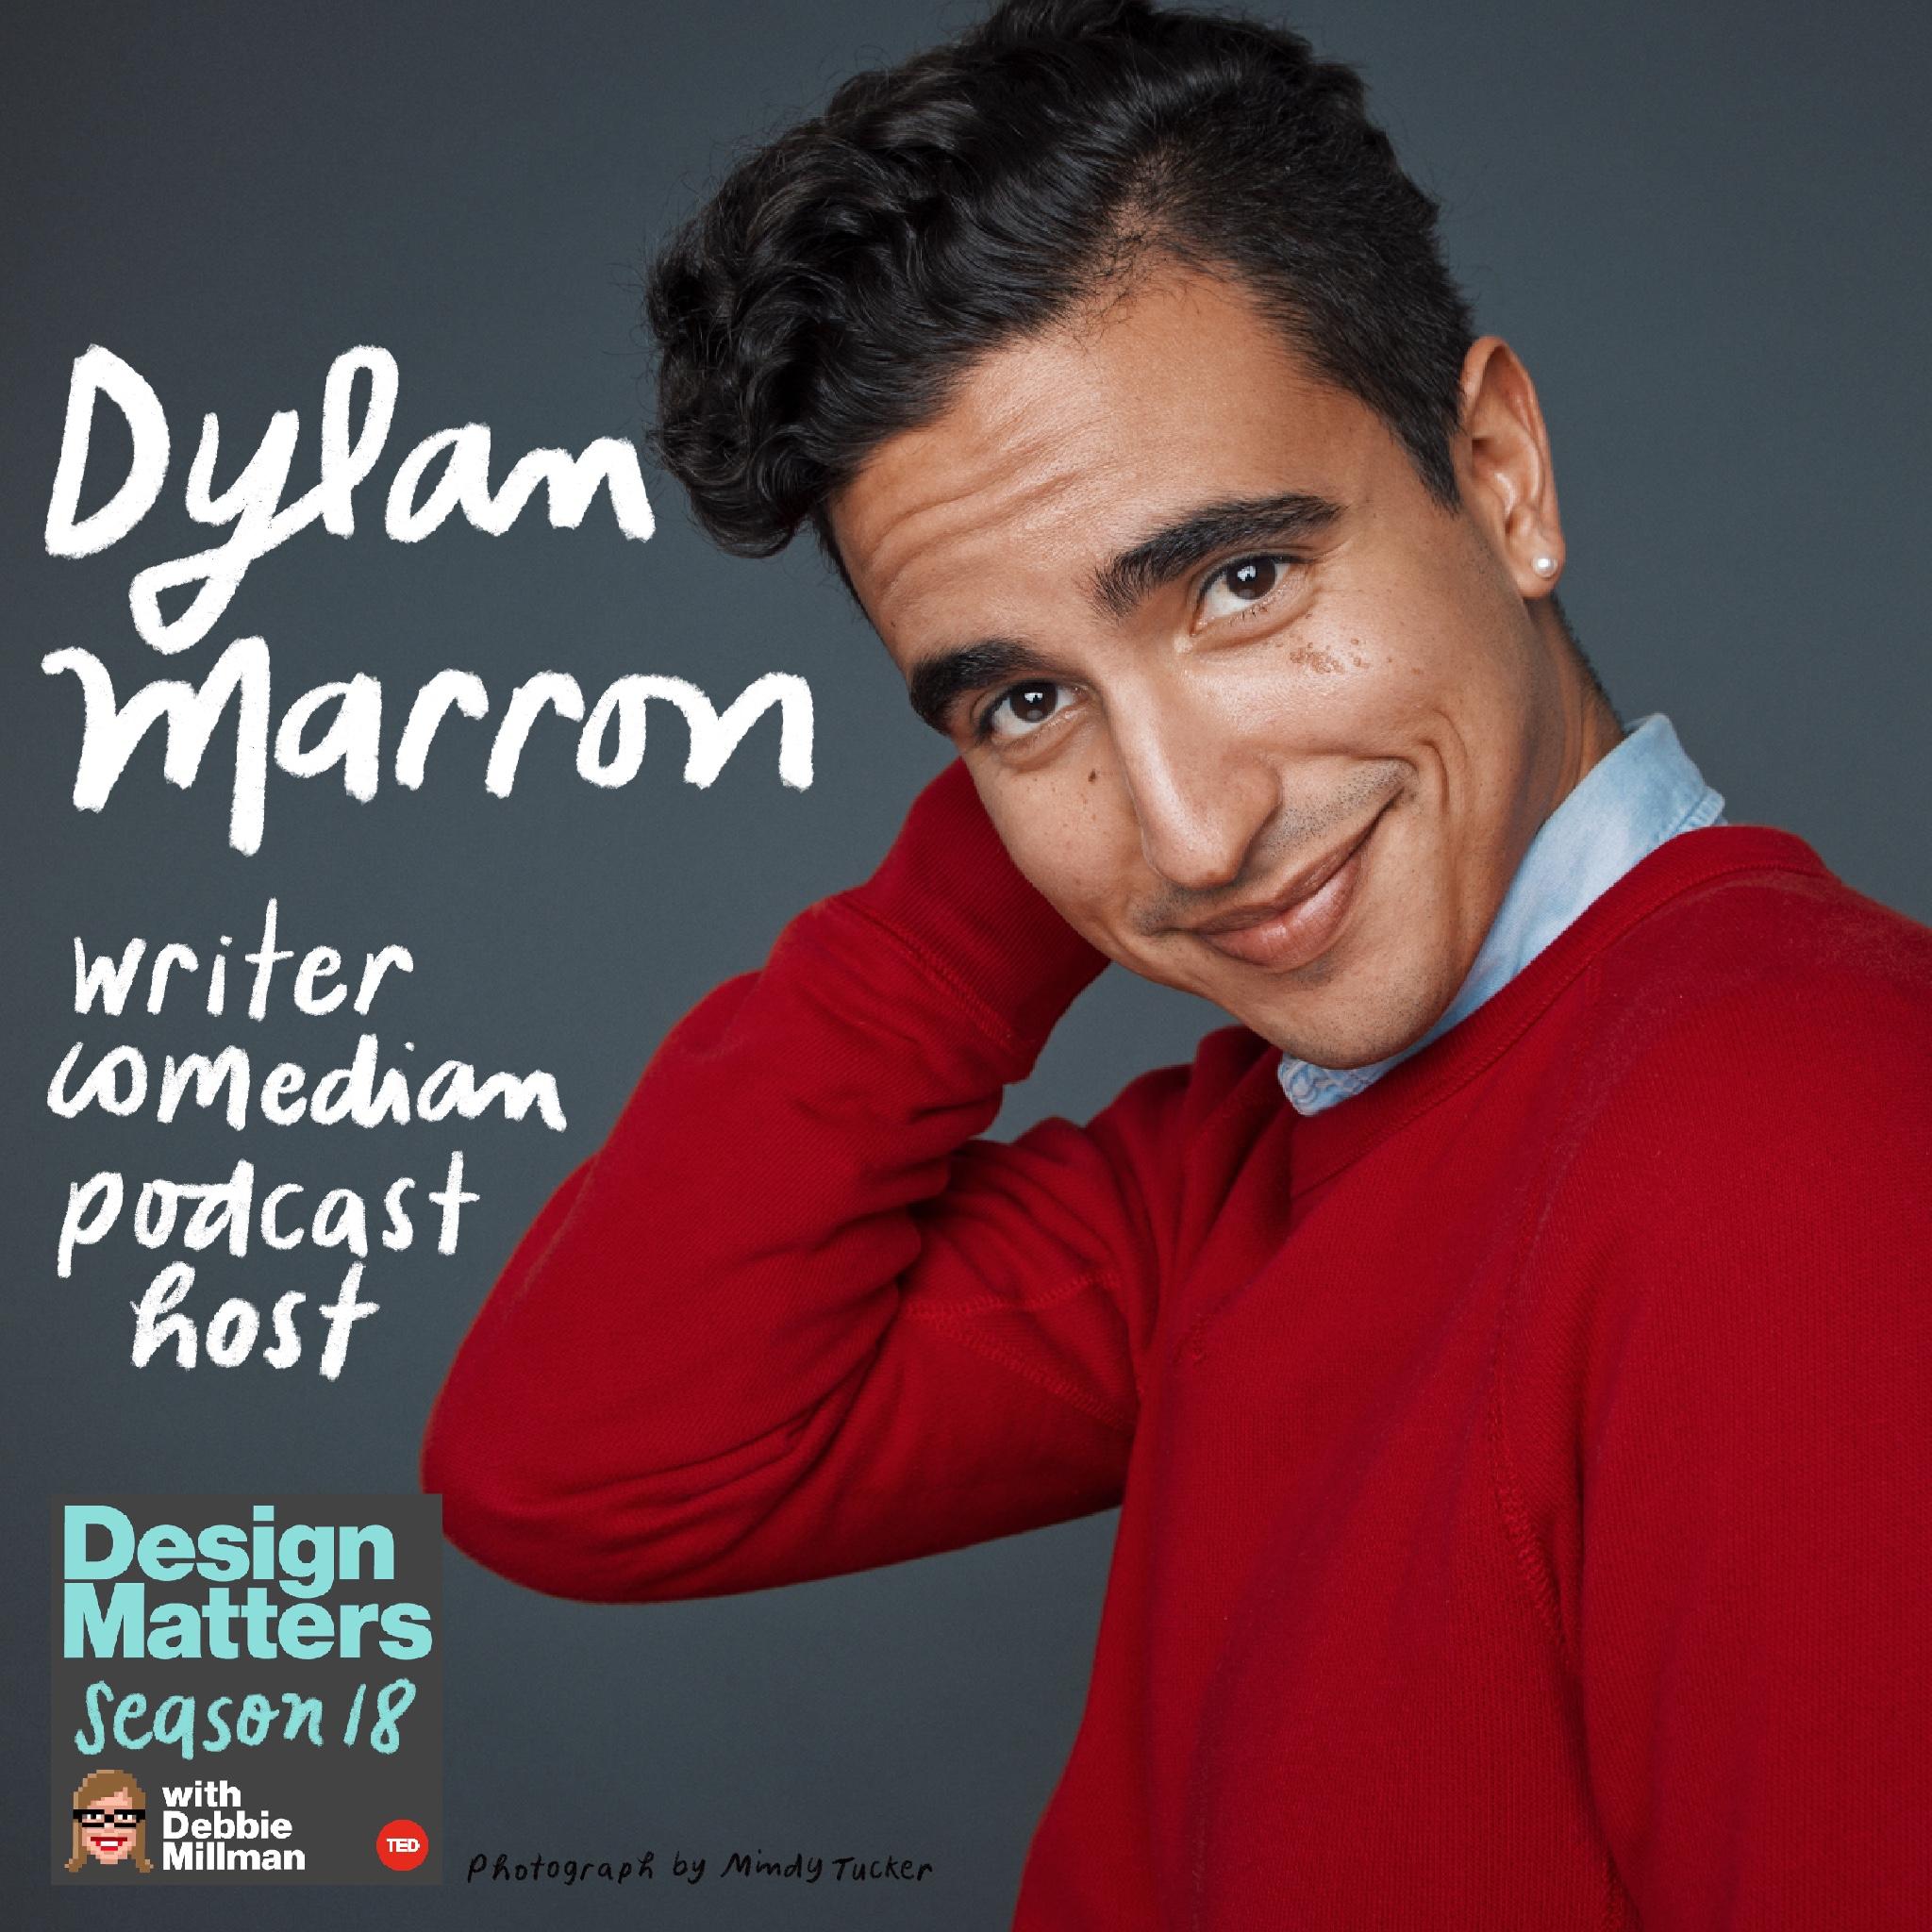 Thumbnail for "Dylan Marron".